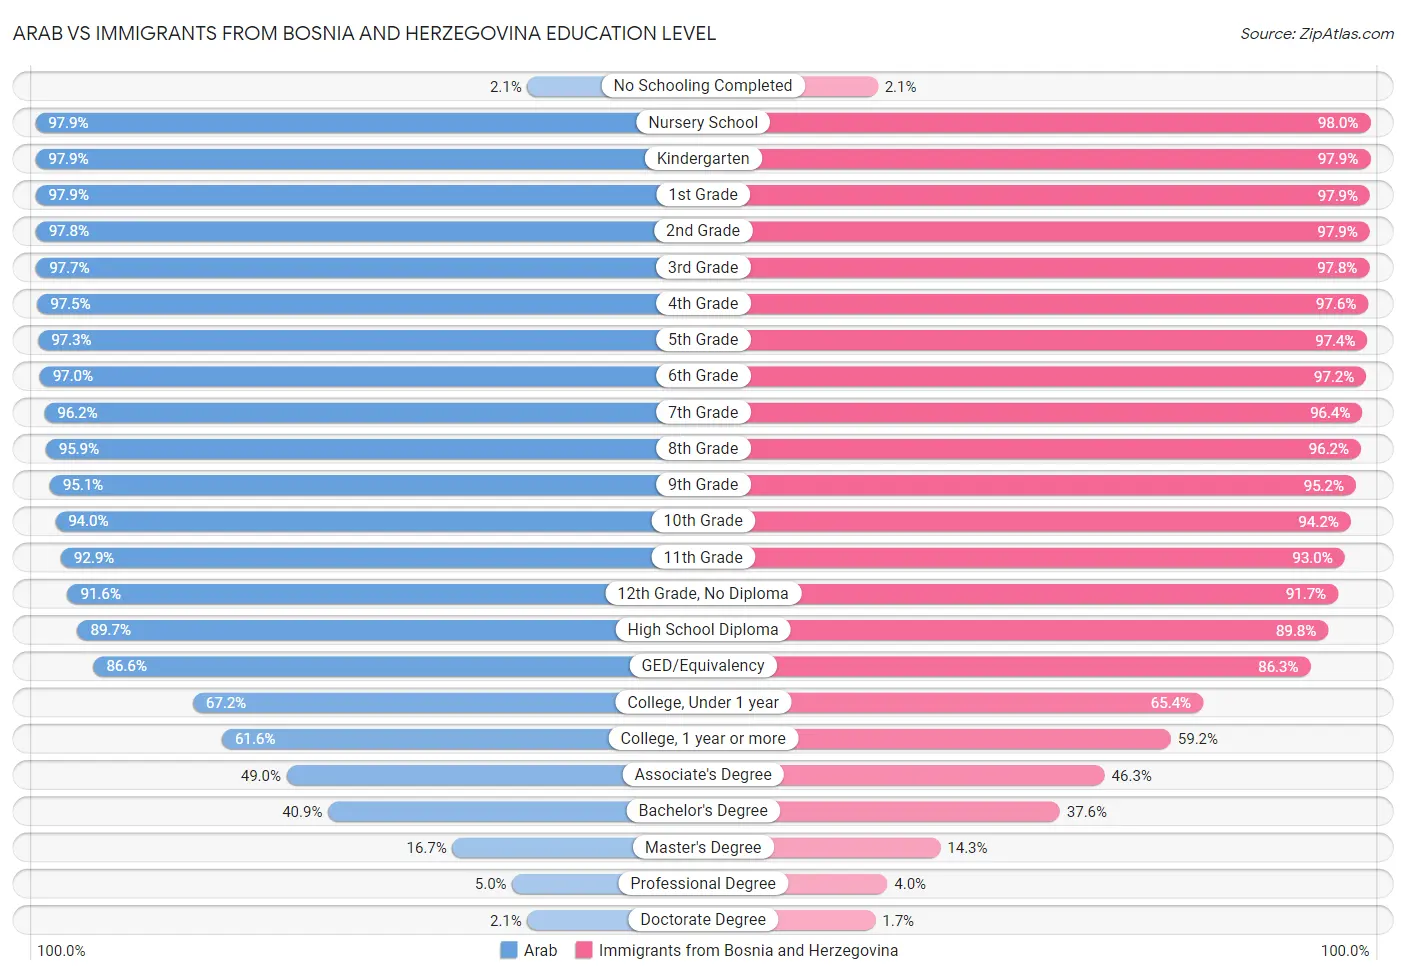 Arab vs Immigrants from Bosnia and Herzegovina Education Level